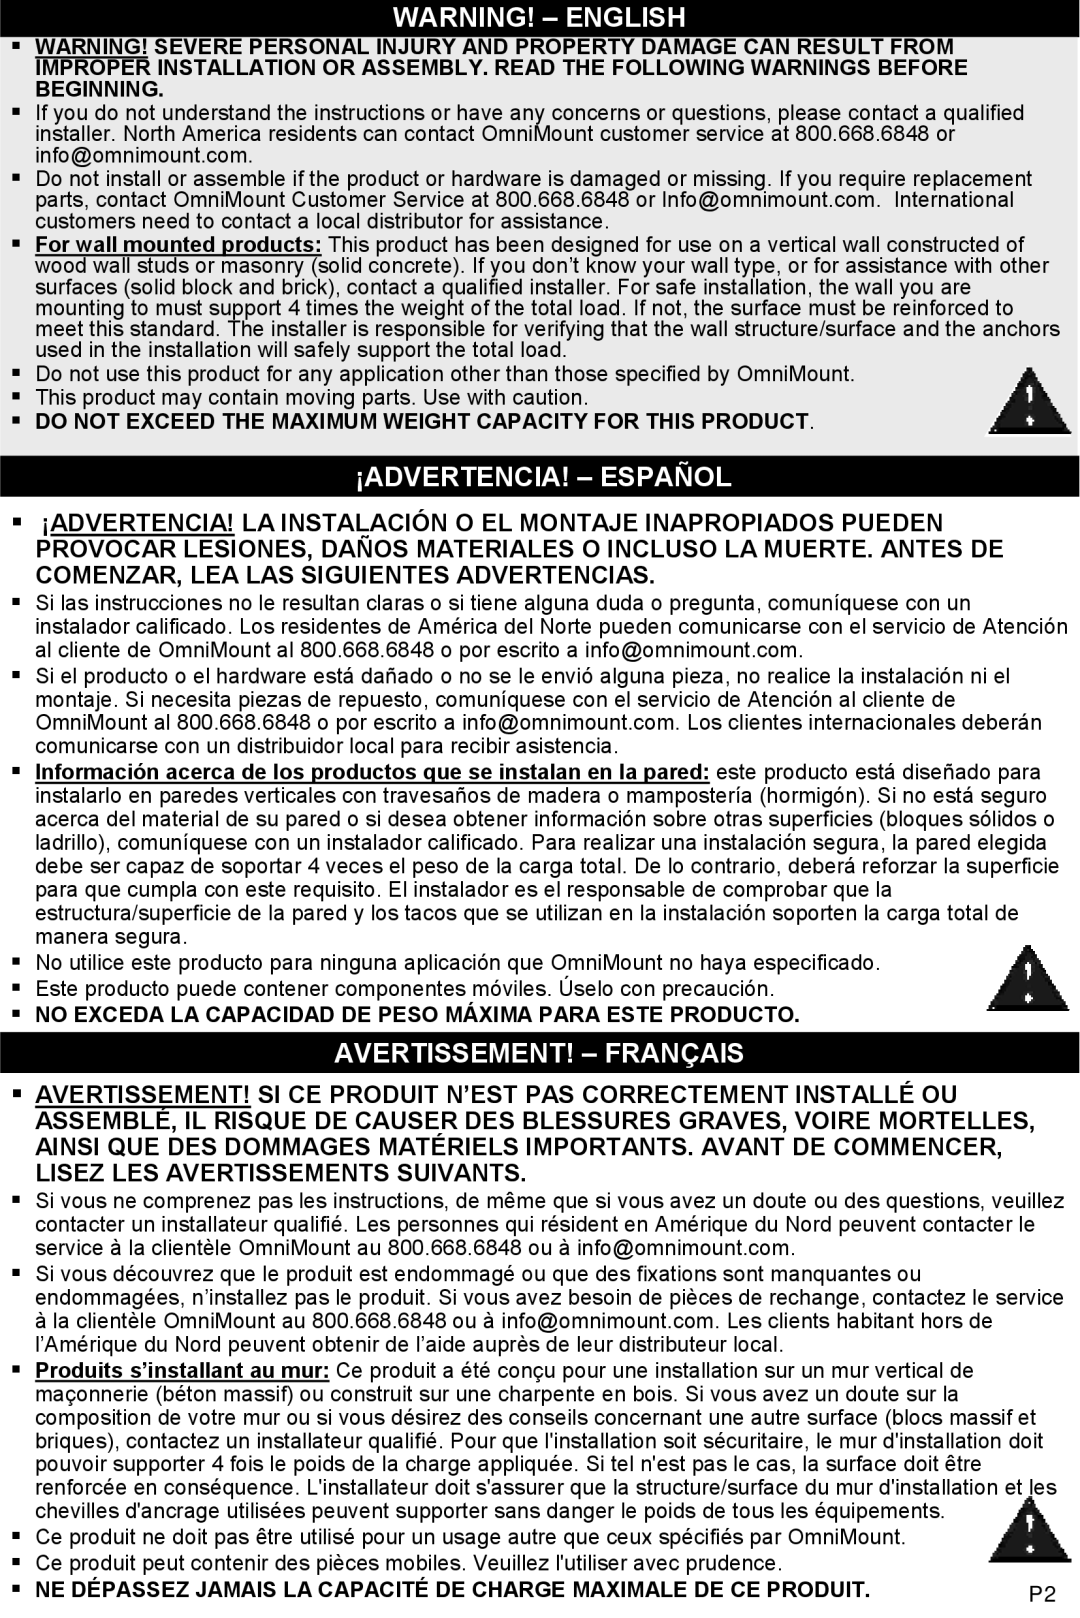 Omnimount UL10021ULN, MWFS instruction manual Warning! - English, ¡Advertencia! - Español, Avertissement! - Français 